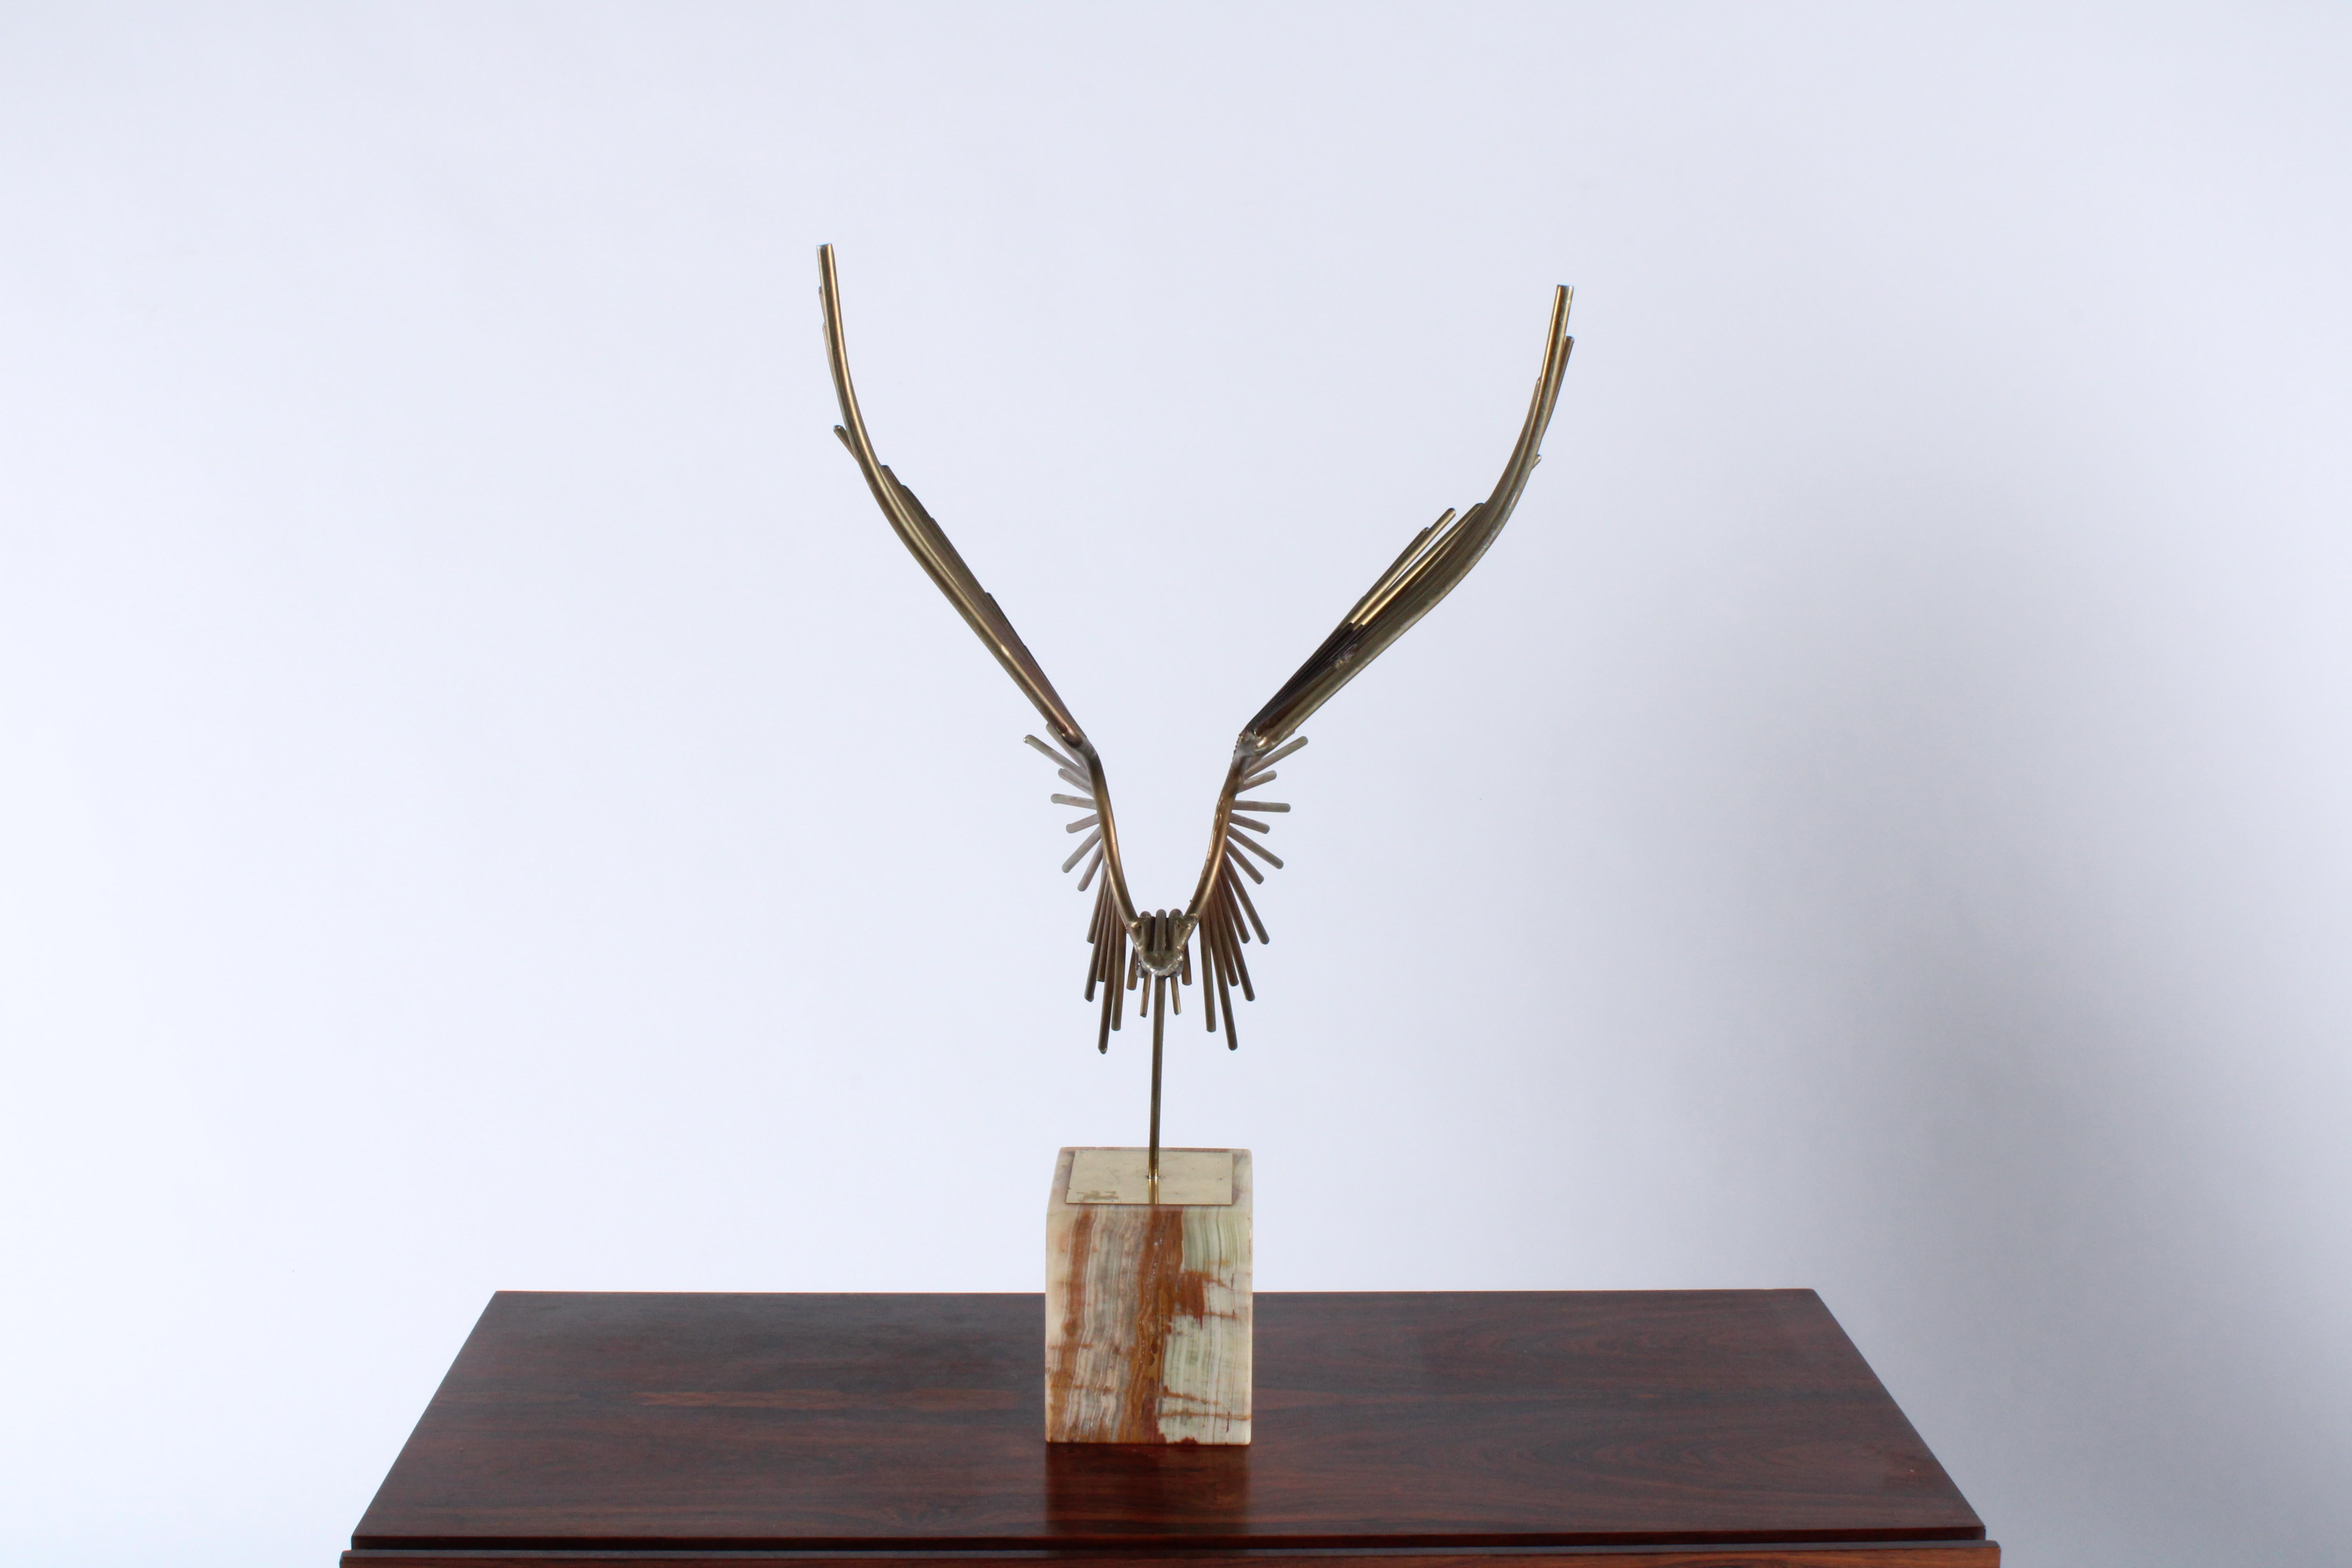 Welded 'Bird In Flight' welded sculpture attributed to Curtis Jere